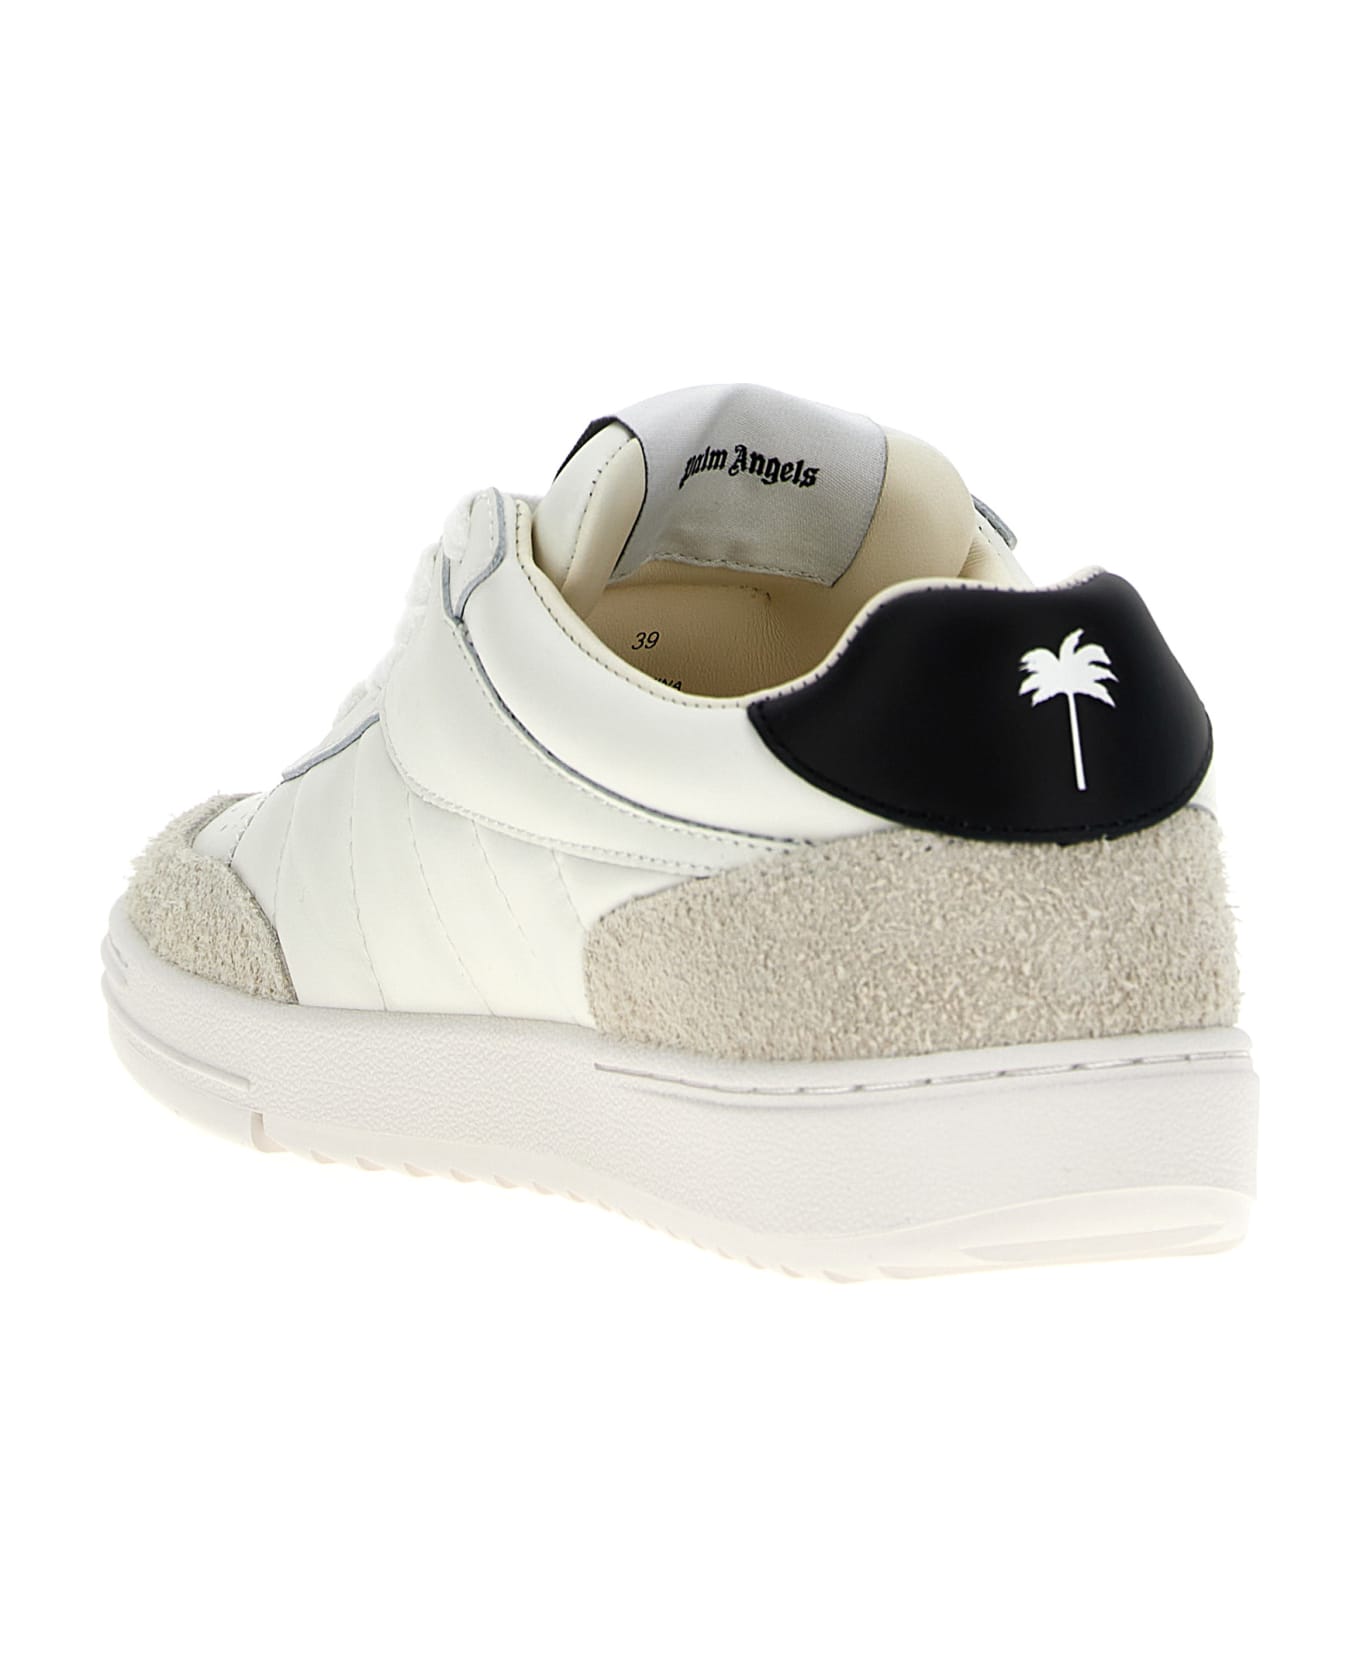 Palm Angels 'palm Beach University' Sneakers - White/Black スニーカー